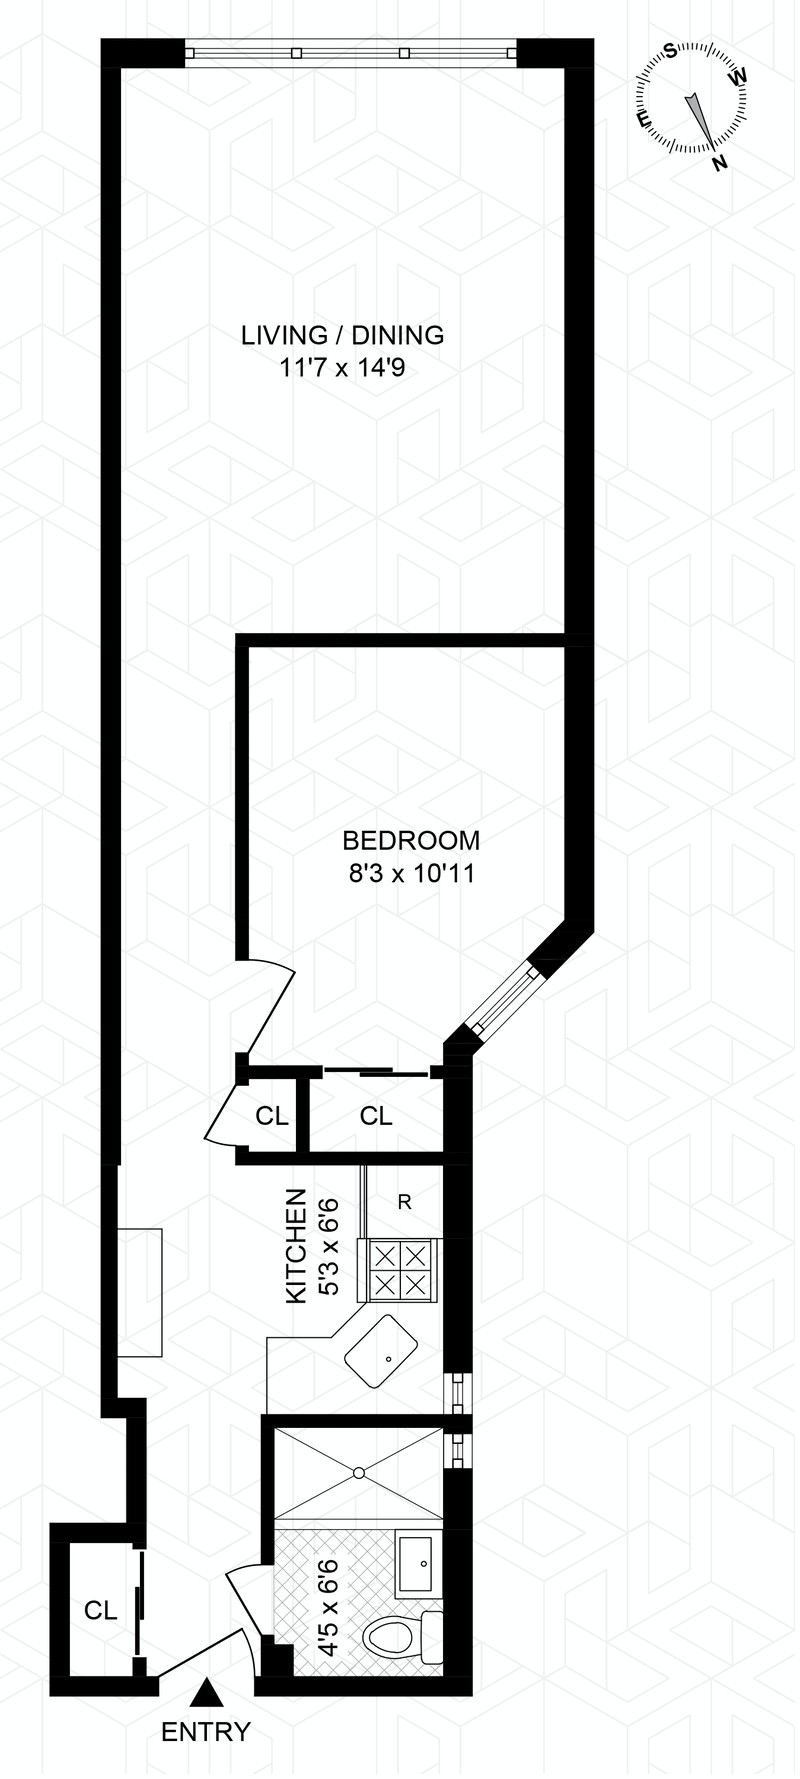 Floorplan for 321 East 89th Street, 3D